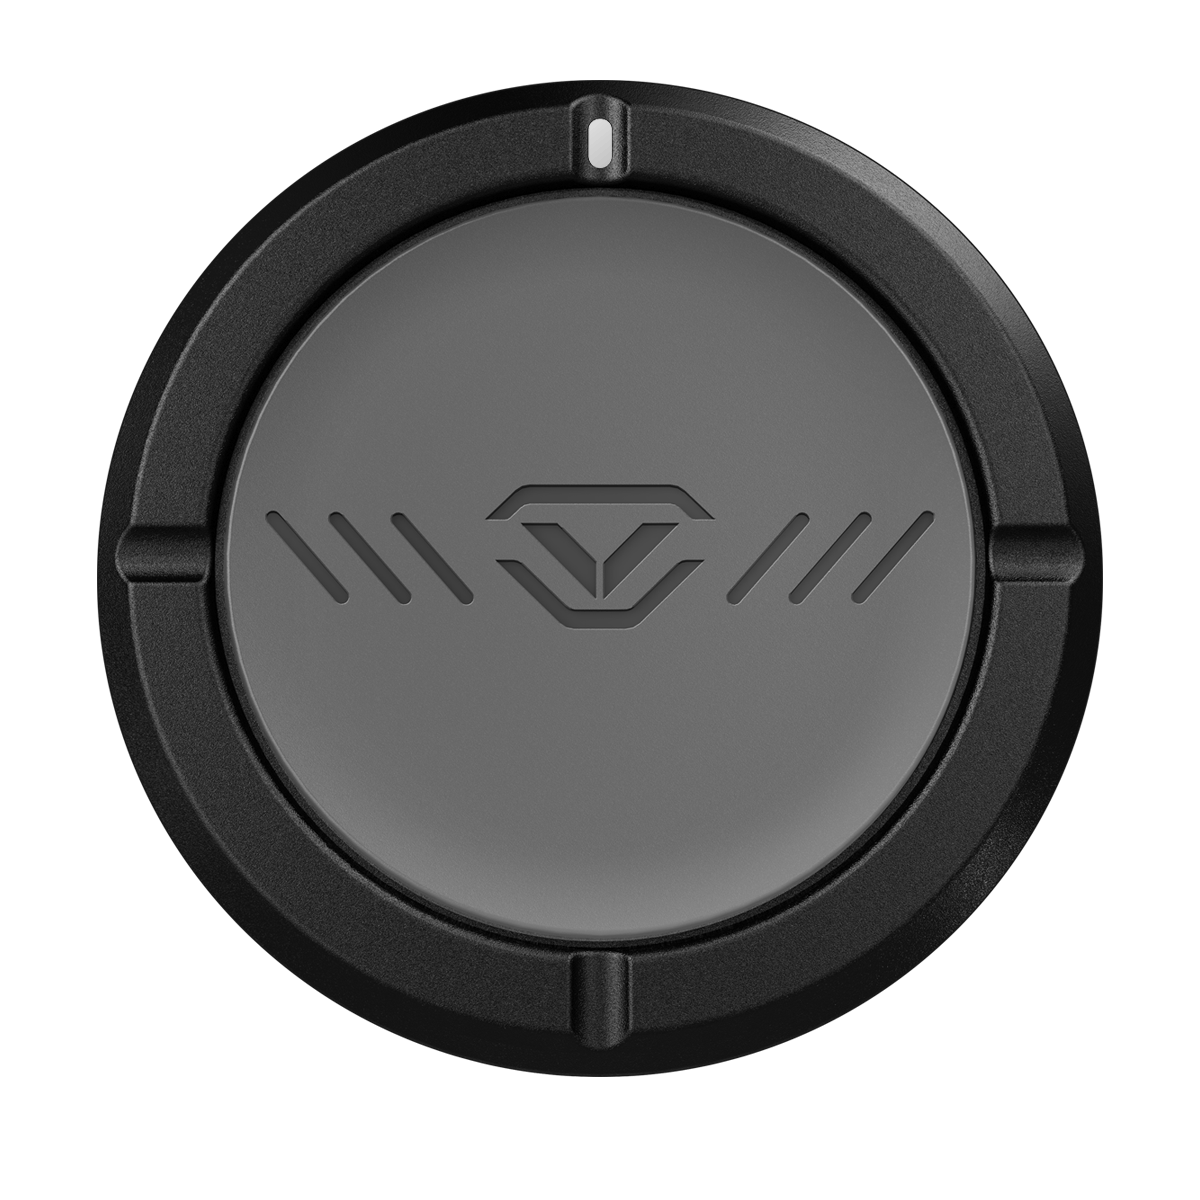 Accessories - Vaultek VSK-N Nano Smart Key